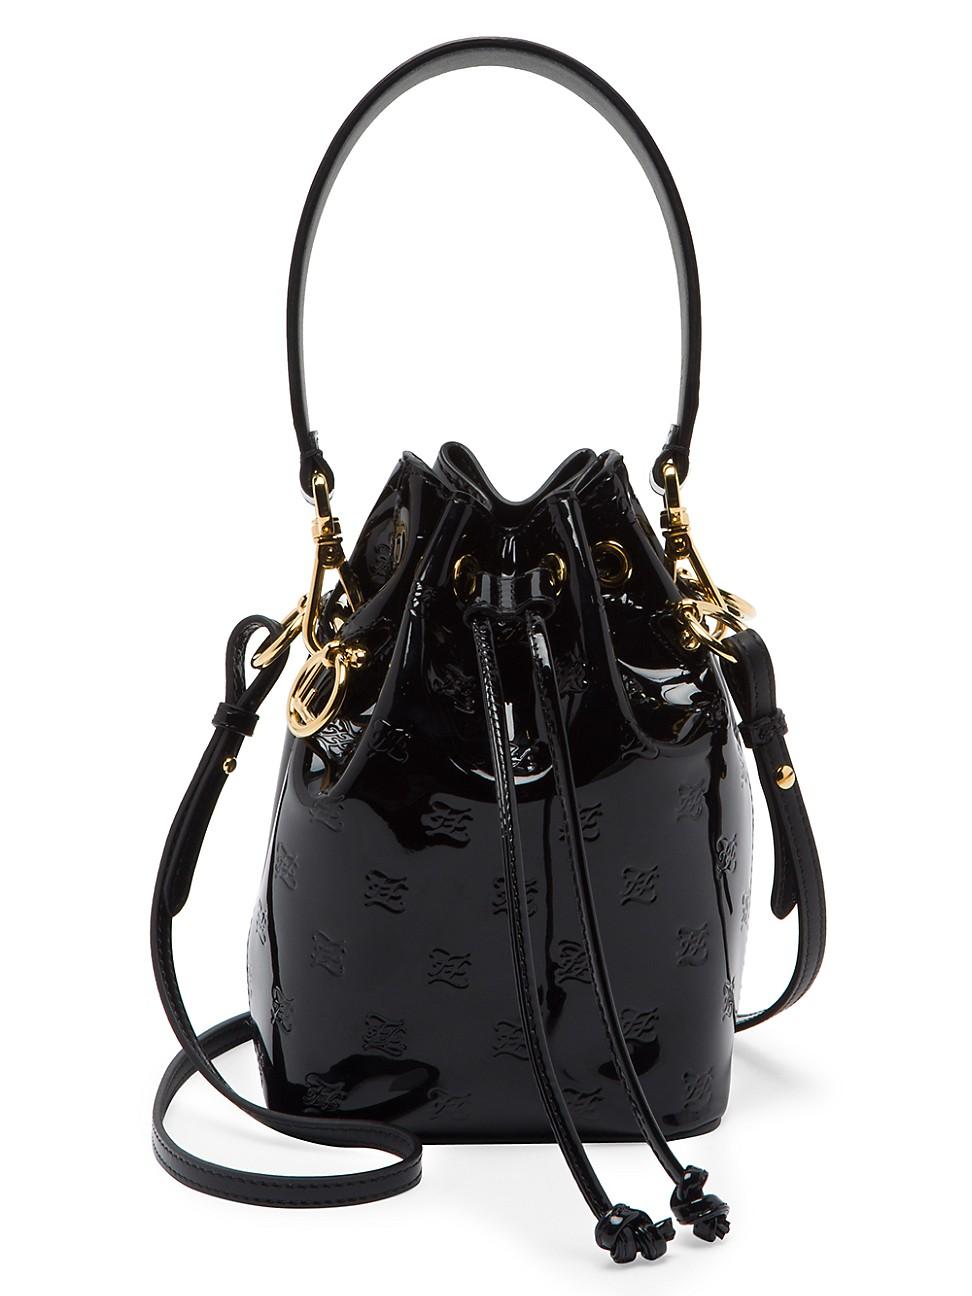 Fendi Mini Mon Tresor Patent Leather Bucket Bag in Black - Lyst